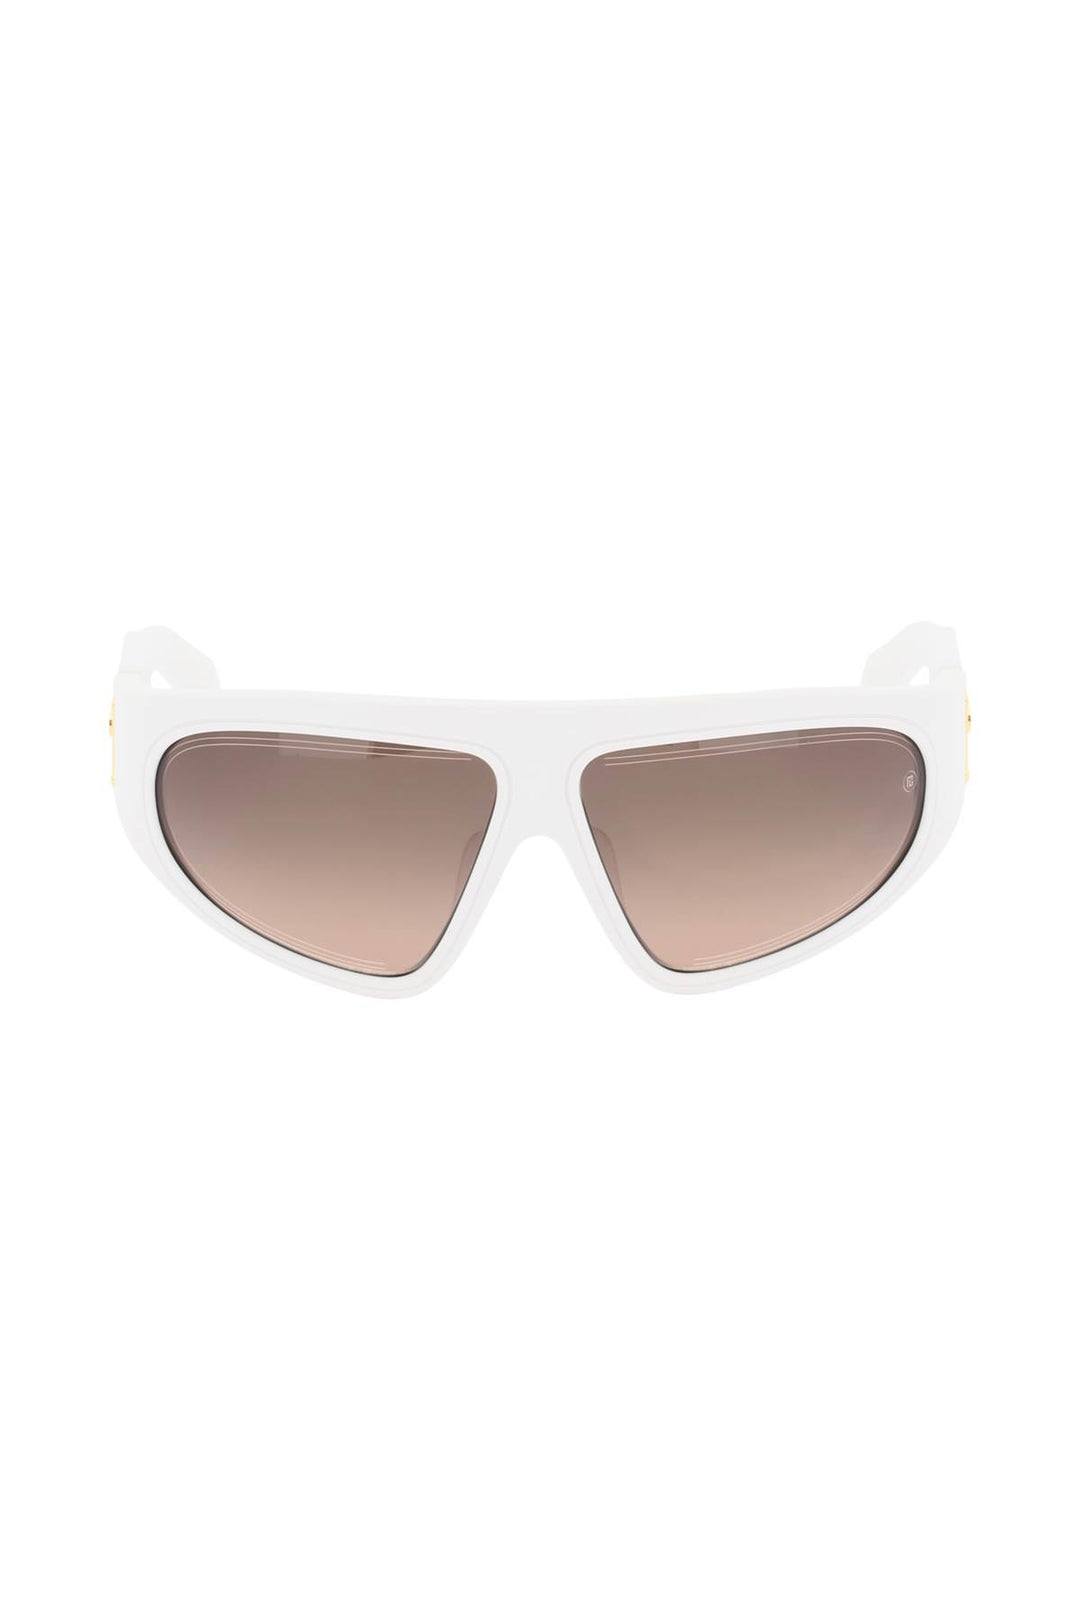 Balmain B Escape Sunglasses   Bianco